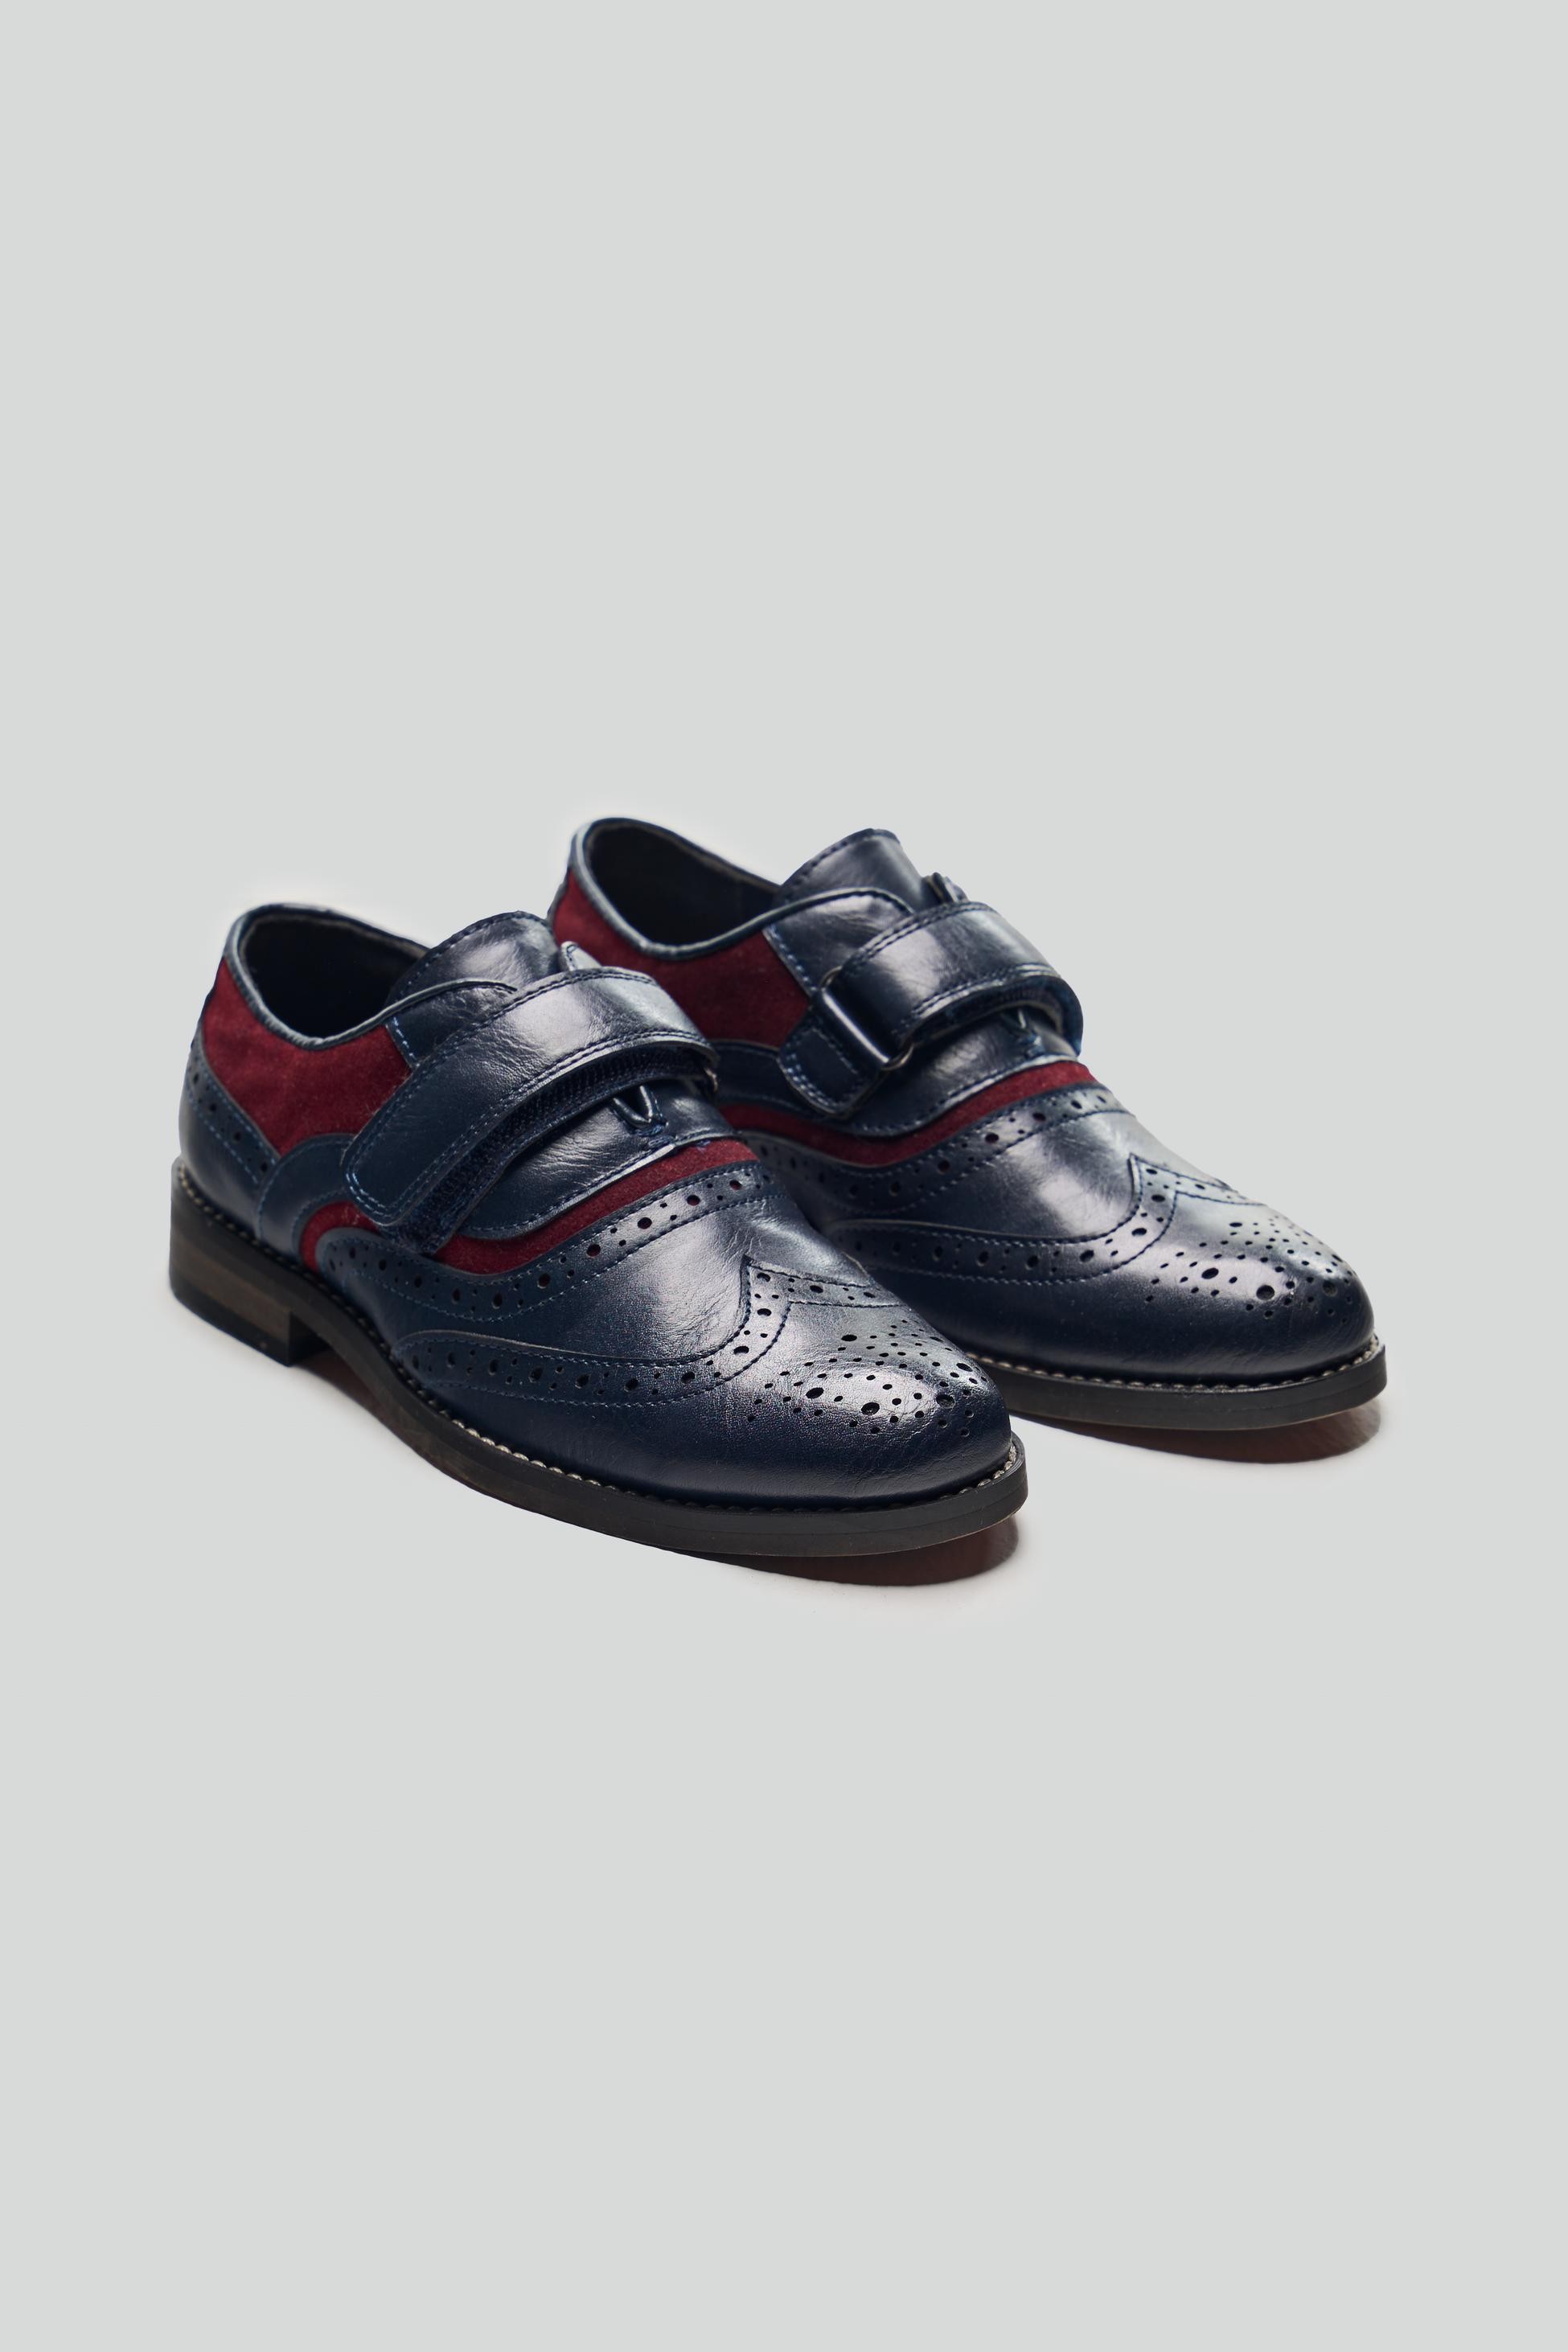 Chaussures Habillées Brogue Oxford à Velcro pour Garçons - RUSSEL - Bleu marine - rouge